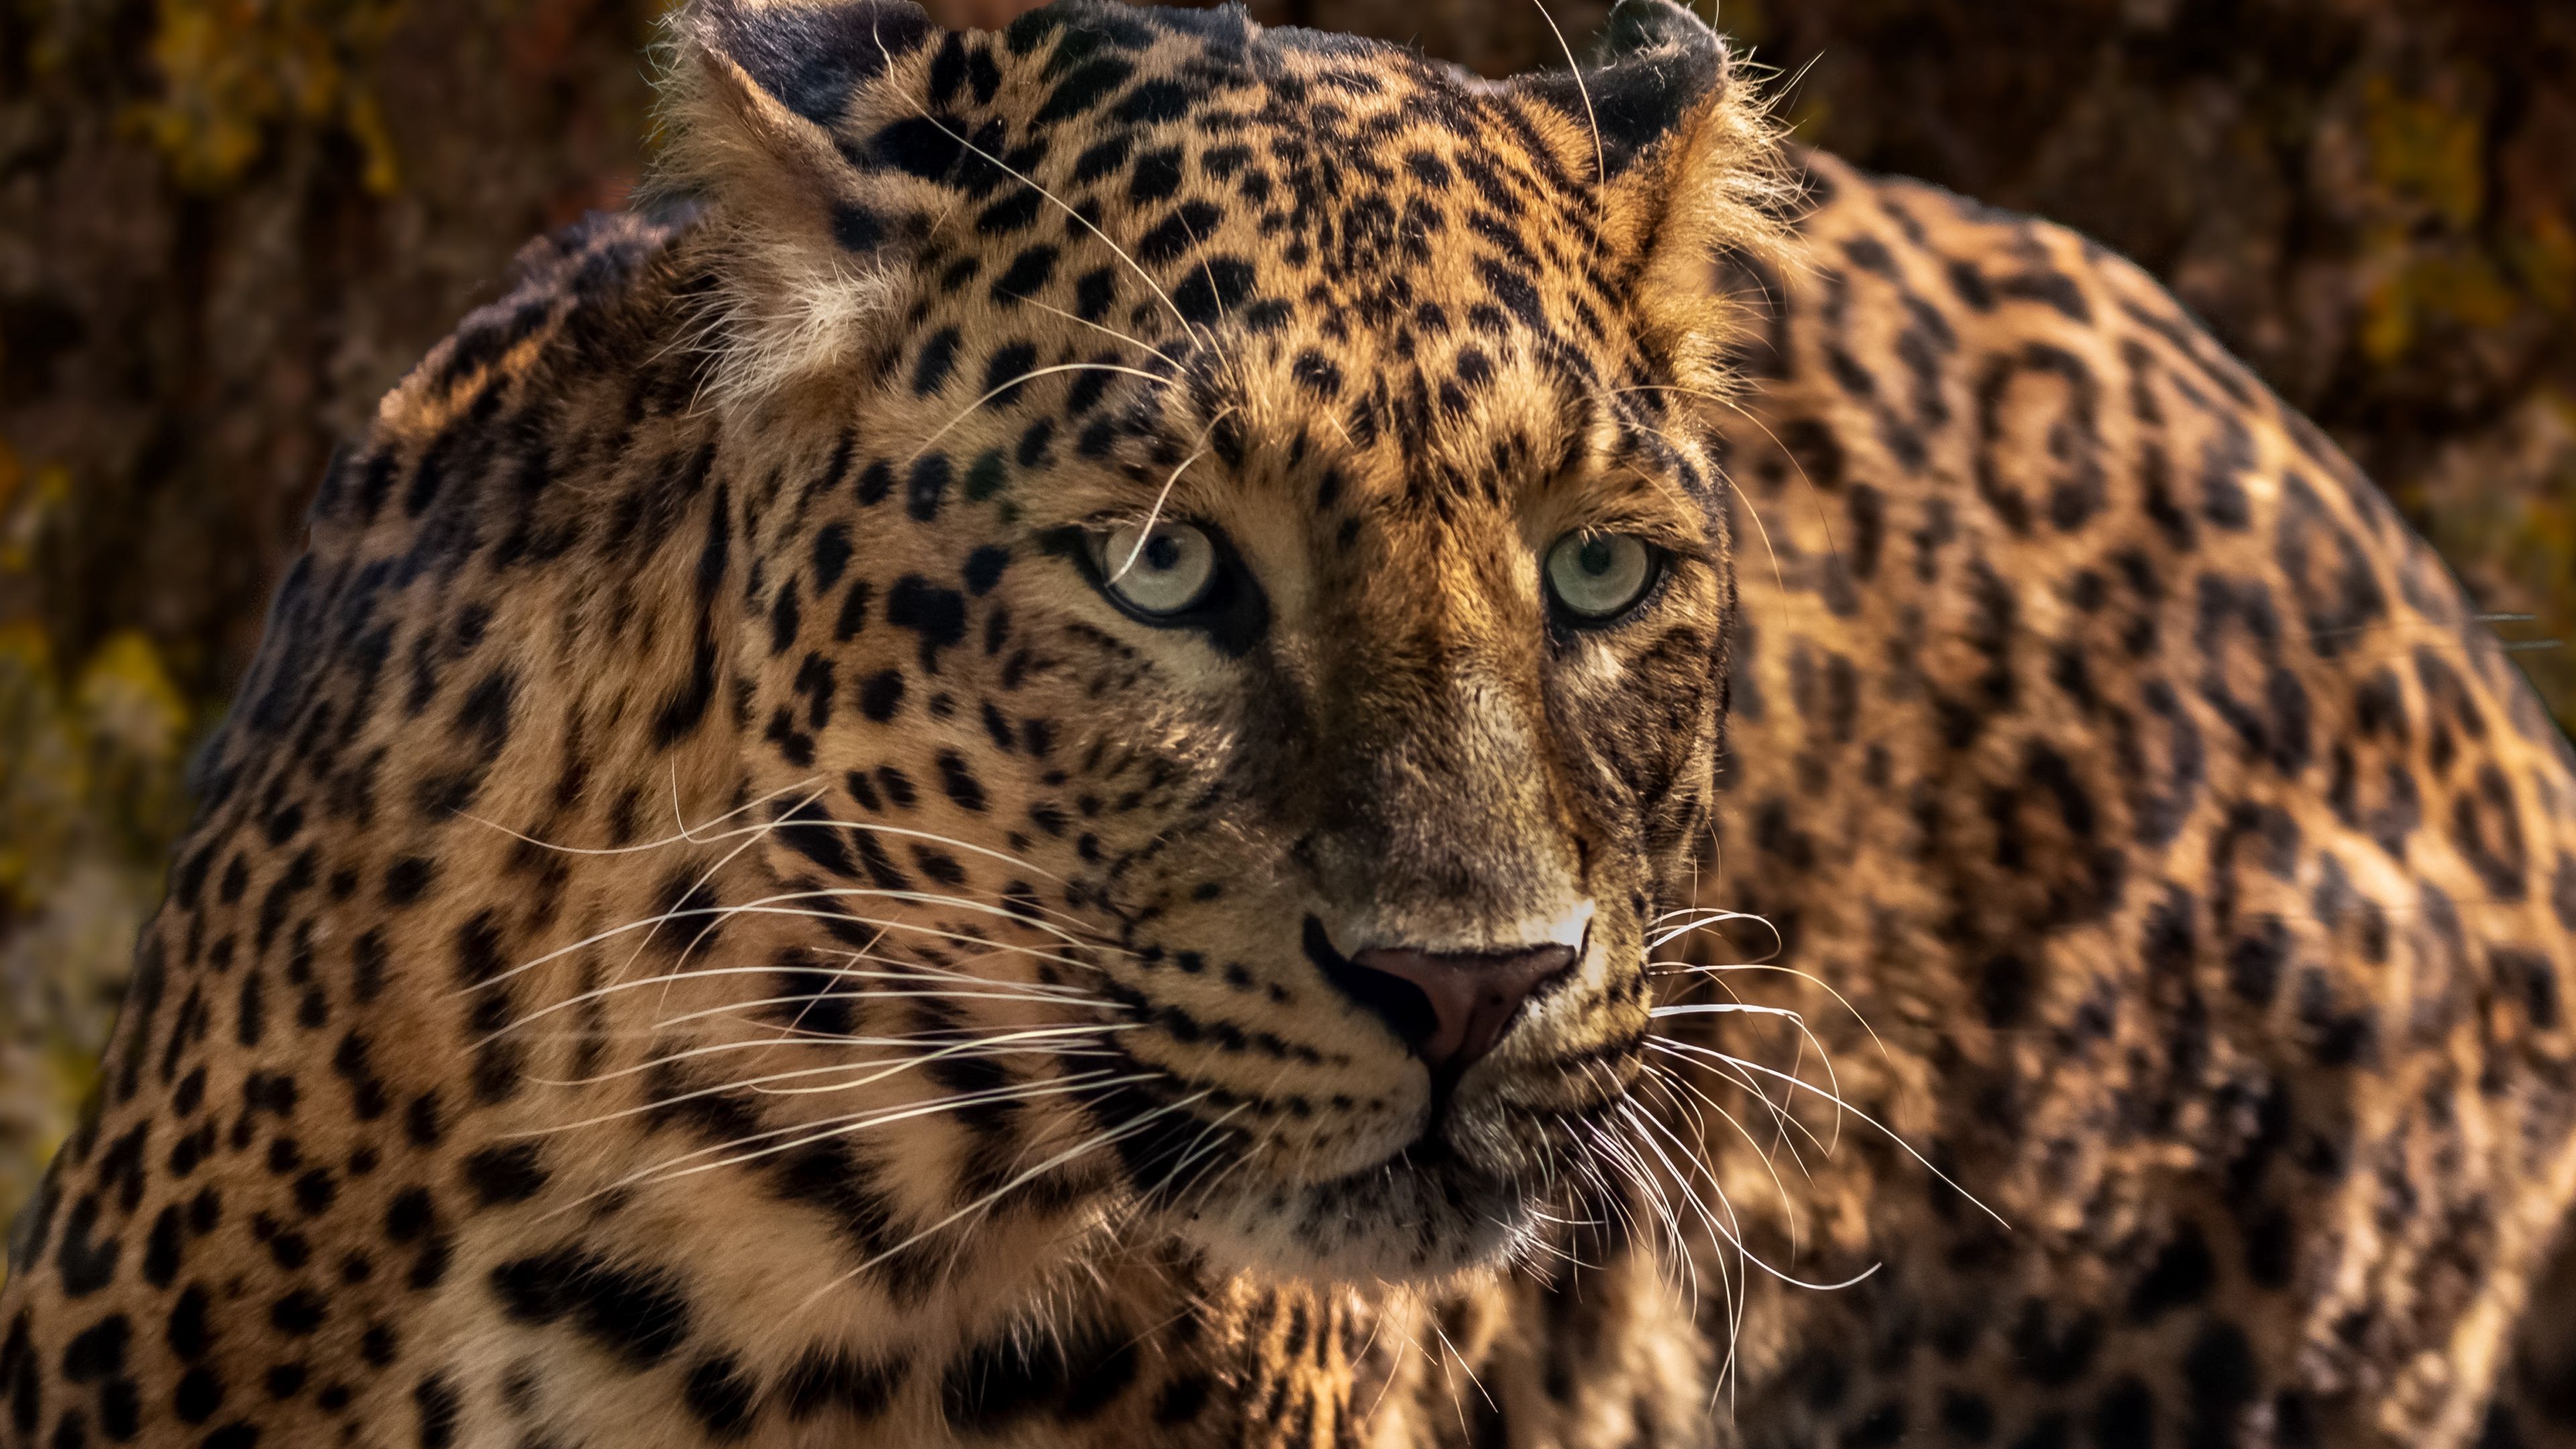 Download wallpaper 3840x2160 jaguar, predator, wild, big cat